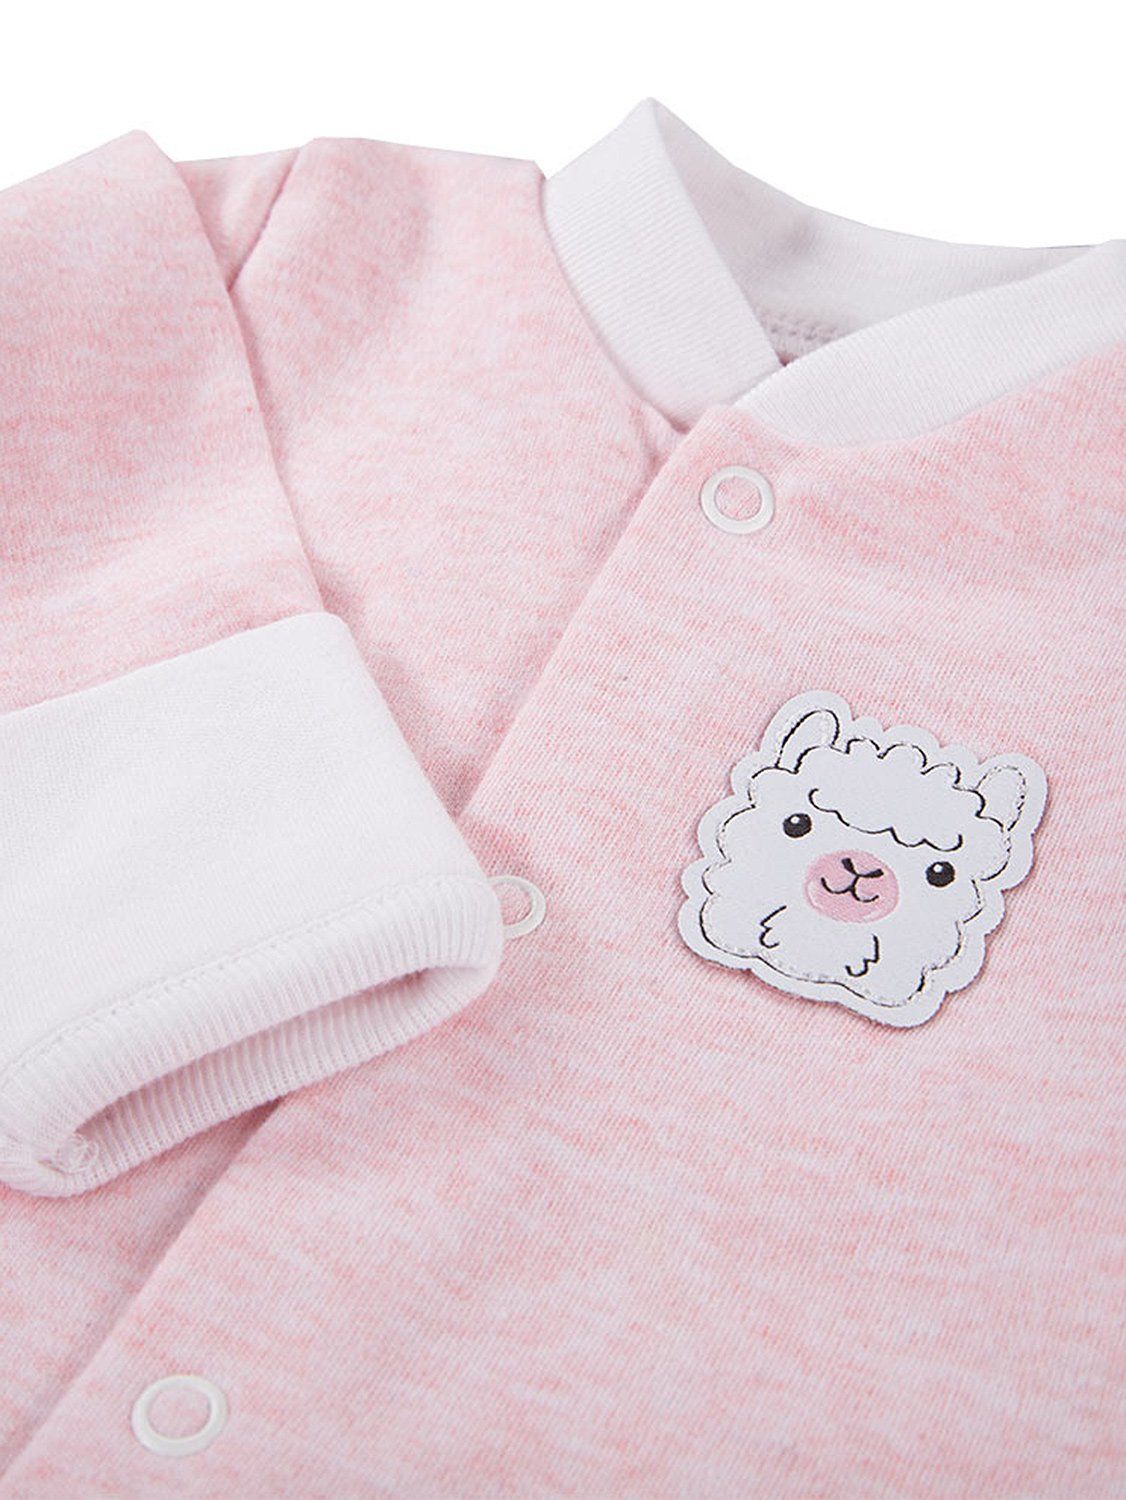 Tiny Baby Footed Sleepsuit, Cute Alpaca Design - Pink Sleepsuit / Babygrow EEVI 